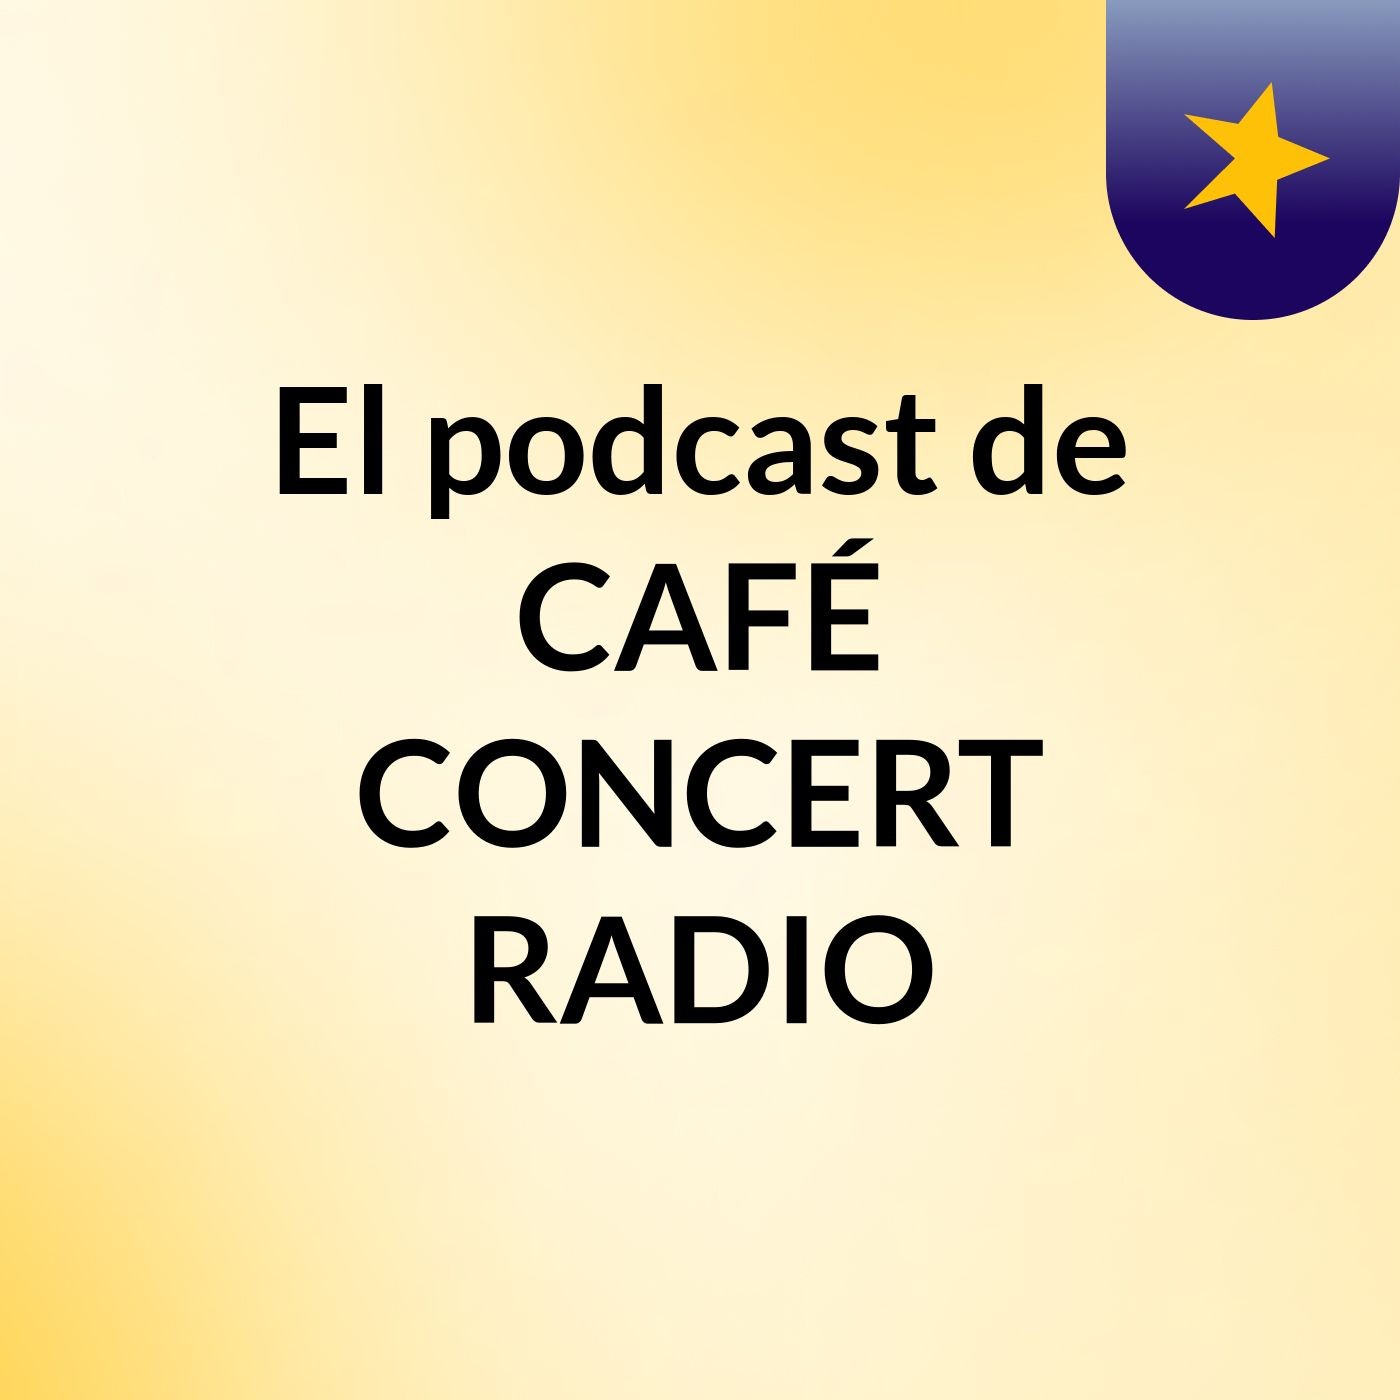 El podcast de CAFÉ CONCERT RADIO